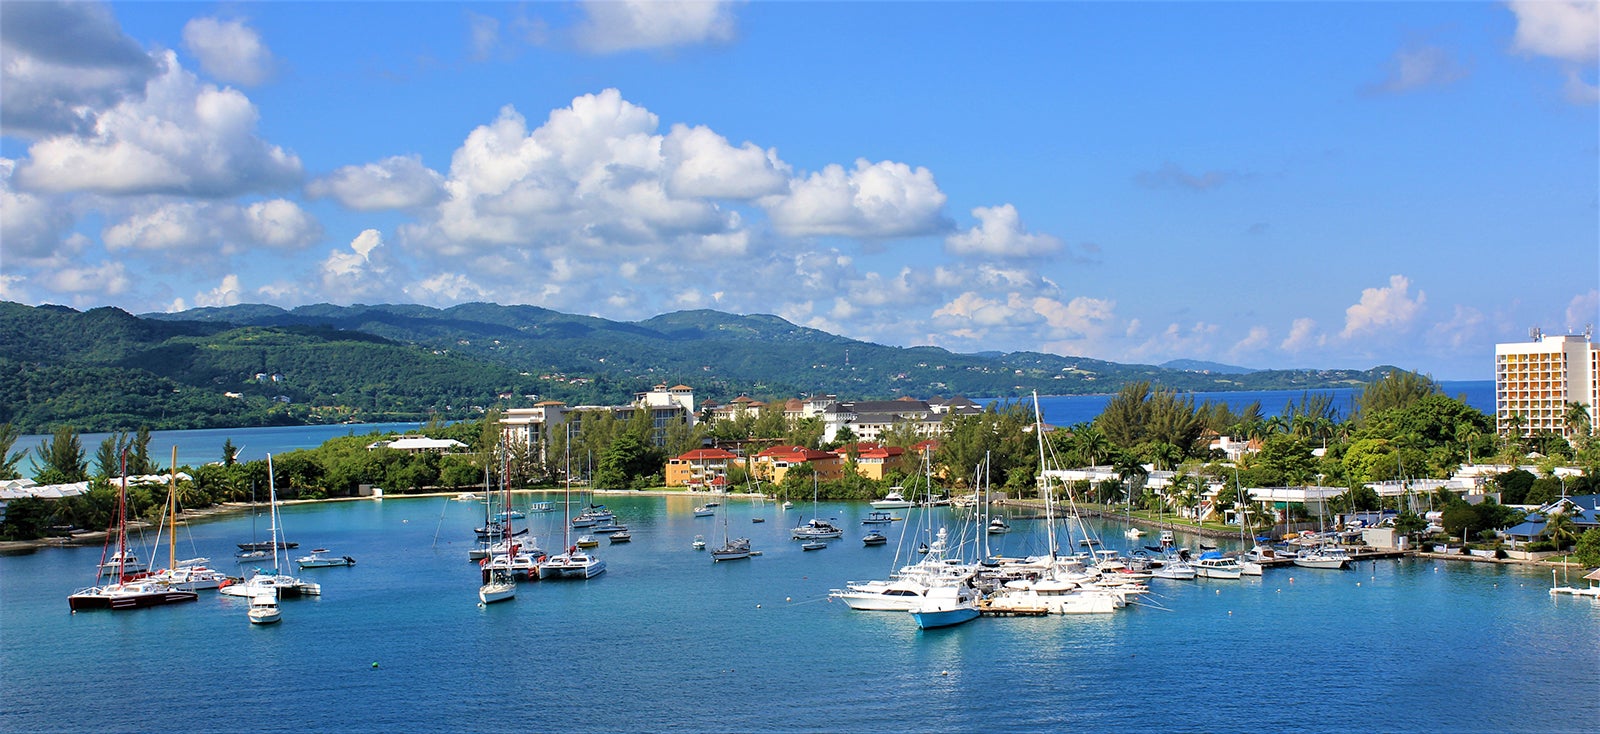 Sunny Day in a Caribbean Paradise: Montego Bay – Jamaica